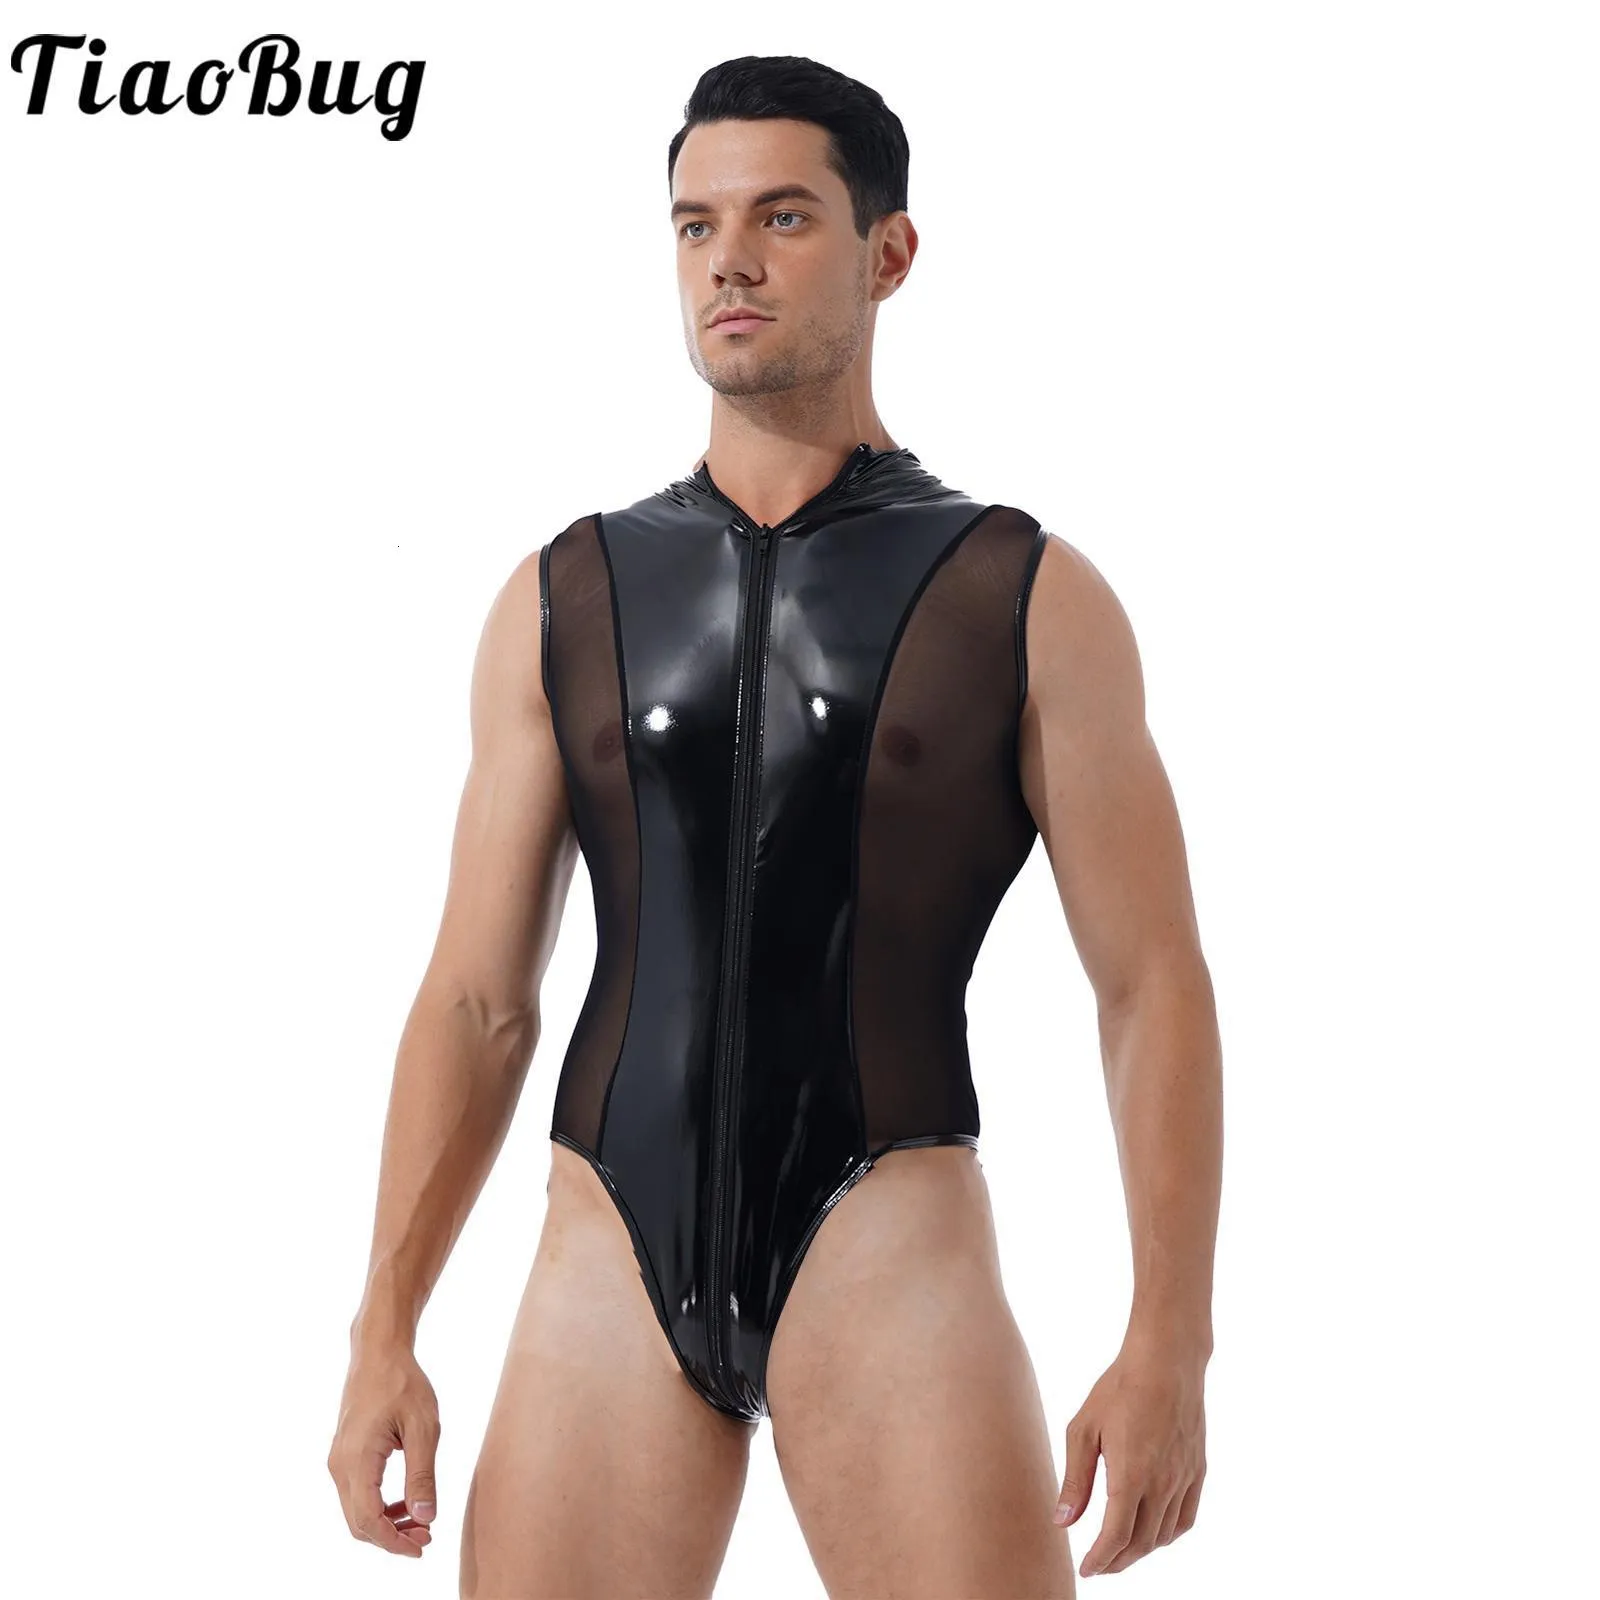 Men's Swimwear TiaoBug Pole dance Party Carnival Club Set Wet Appearance Patent Leather Skintight garment Zipper High Cut Thong 230705